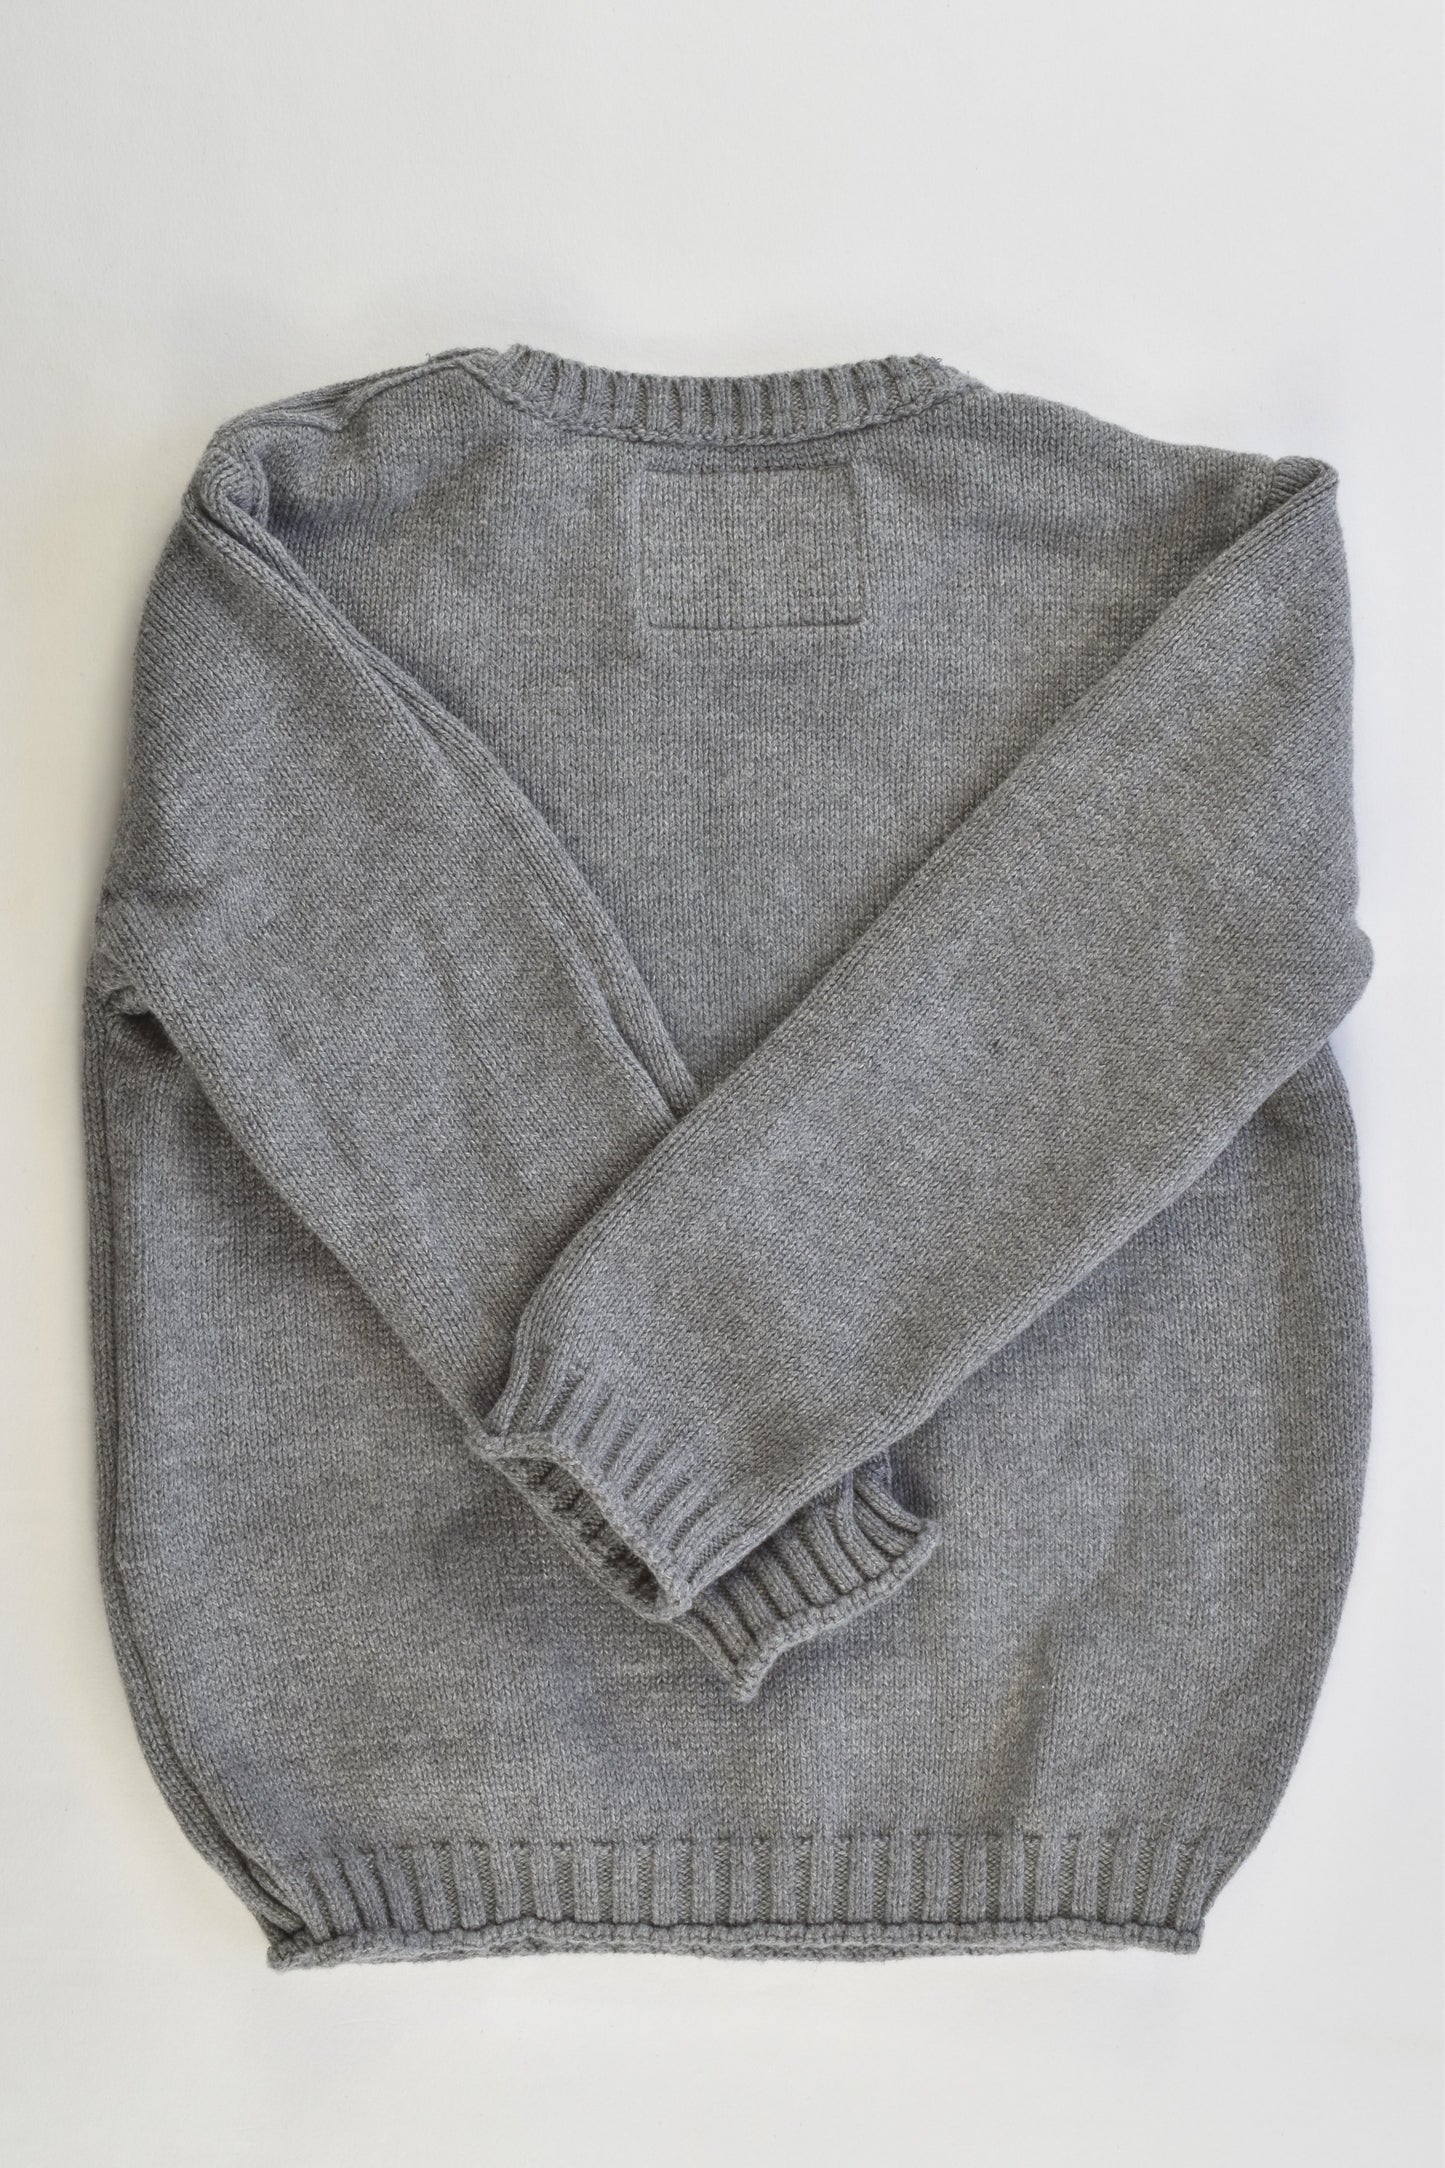 NEW Zara Size 18-24 months (2) Knitted Jumper